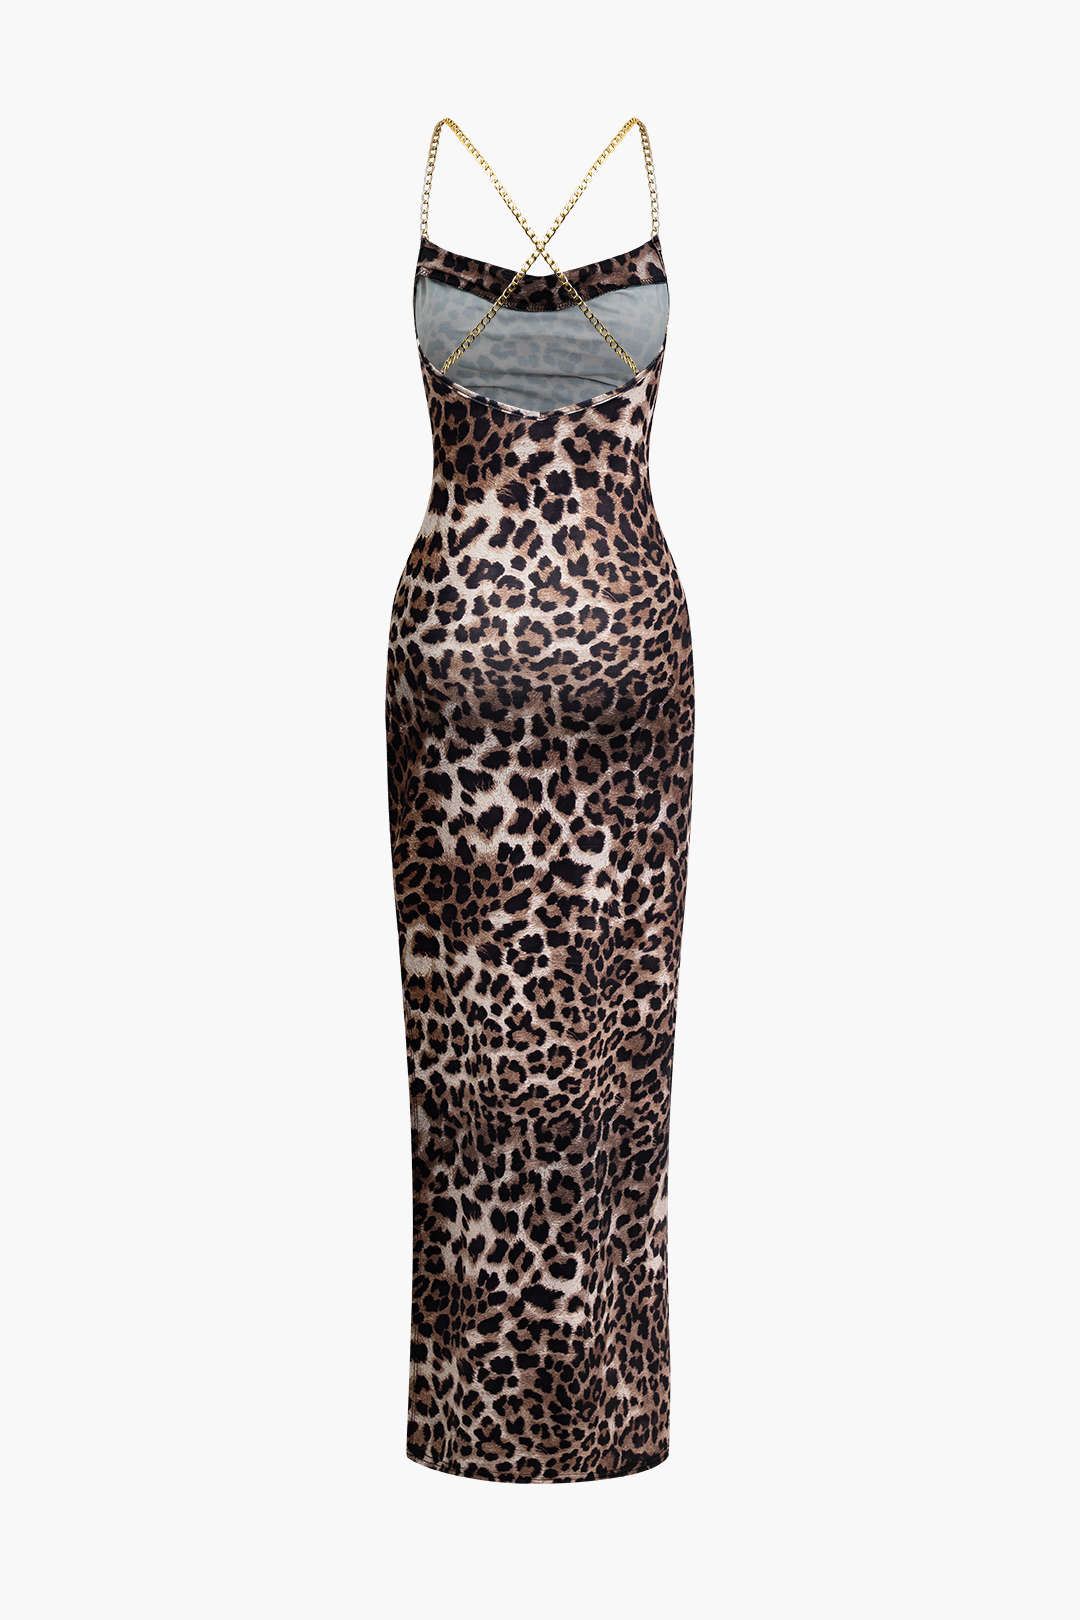 Leopard Print Cross Chain Backless Cowl Neck Slit Maxi Dress